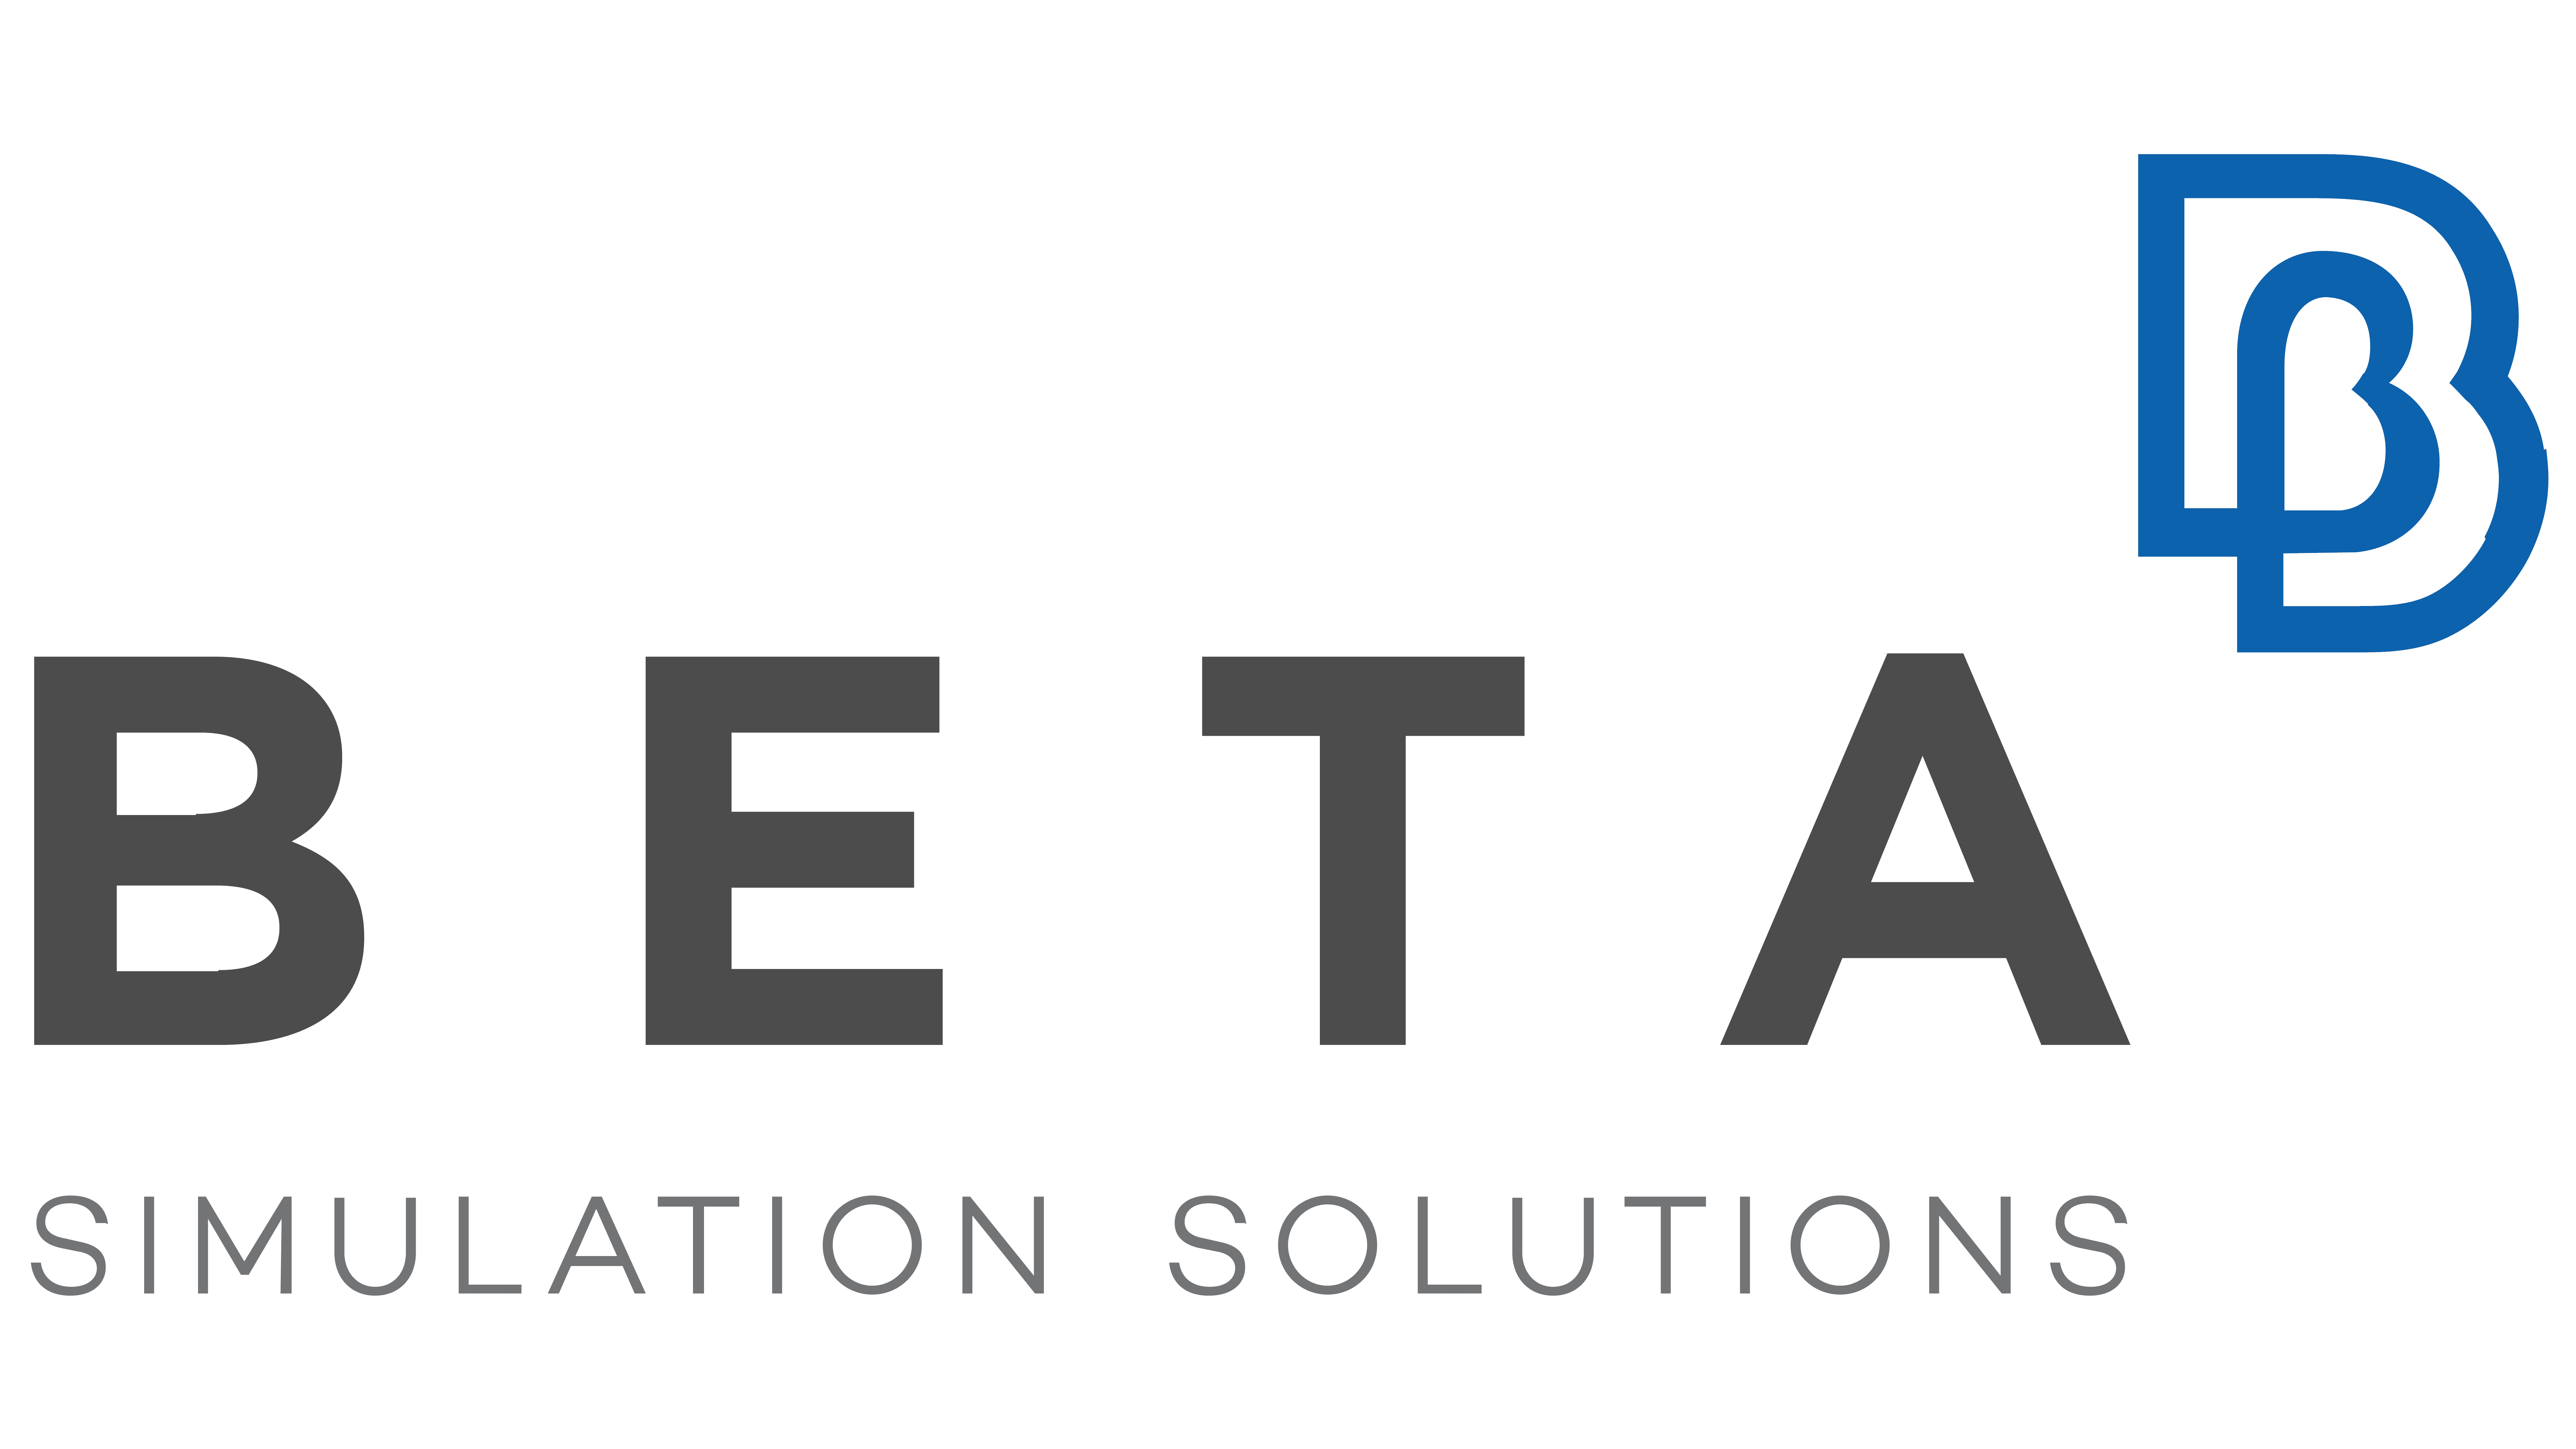 BETA CAE Systems